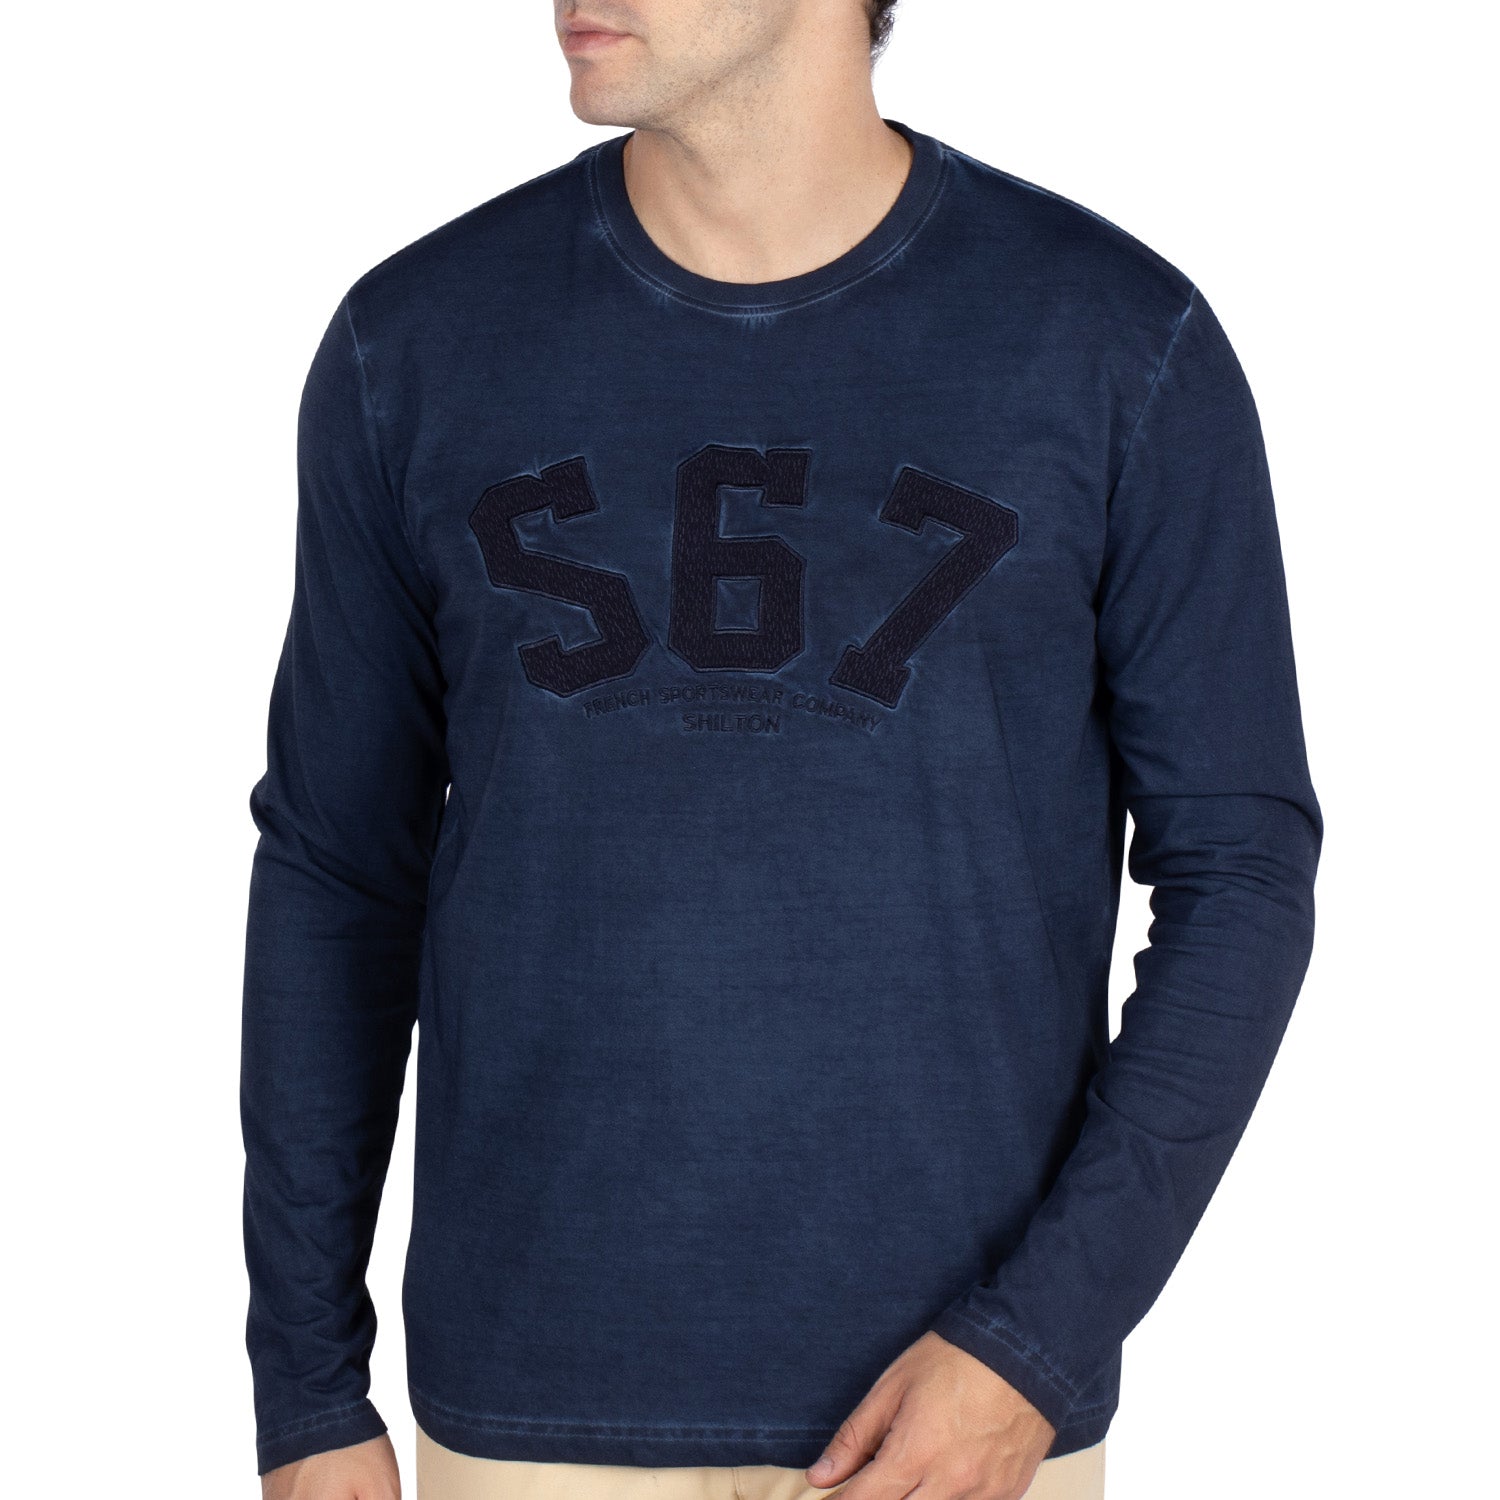 Tshirt S67 Navy